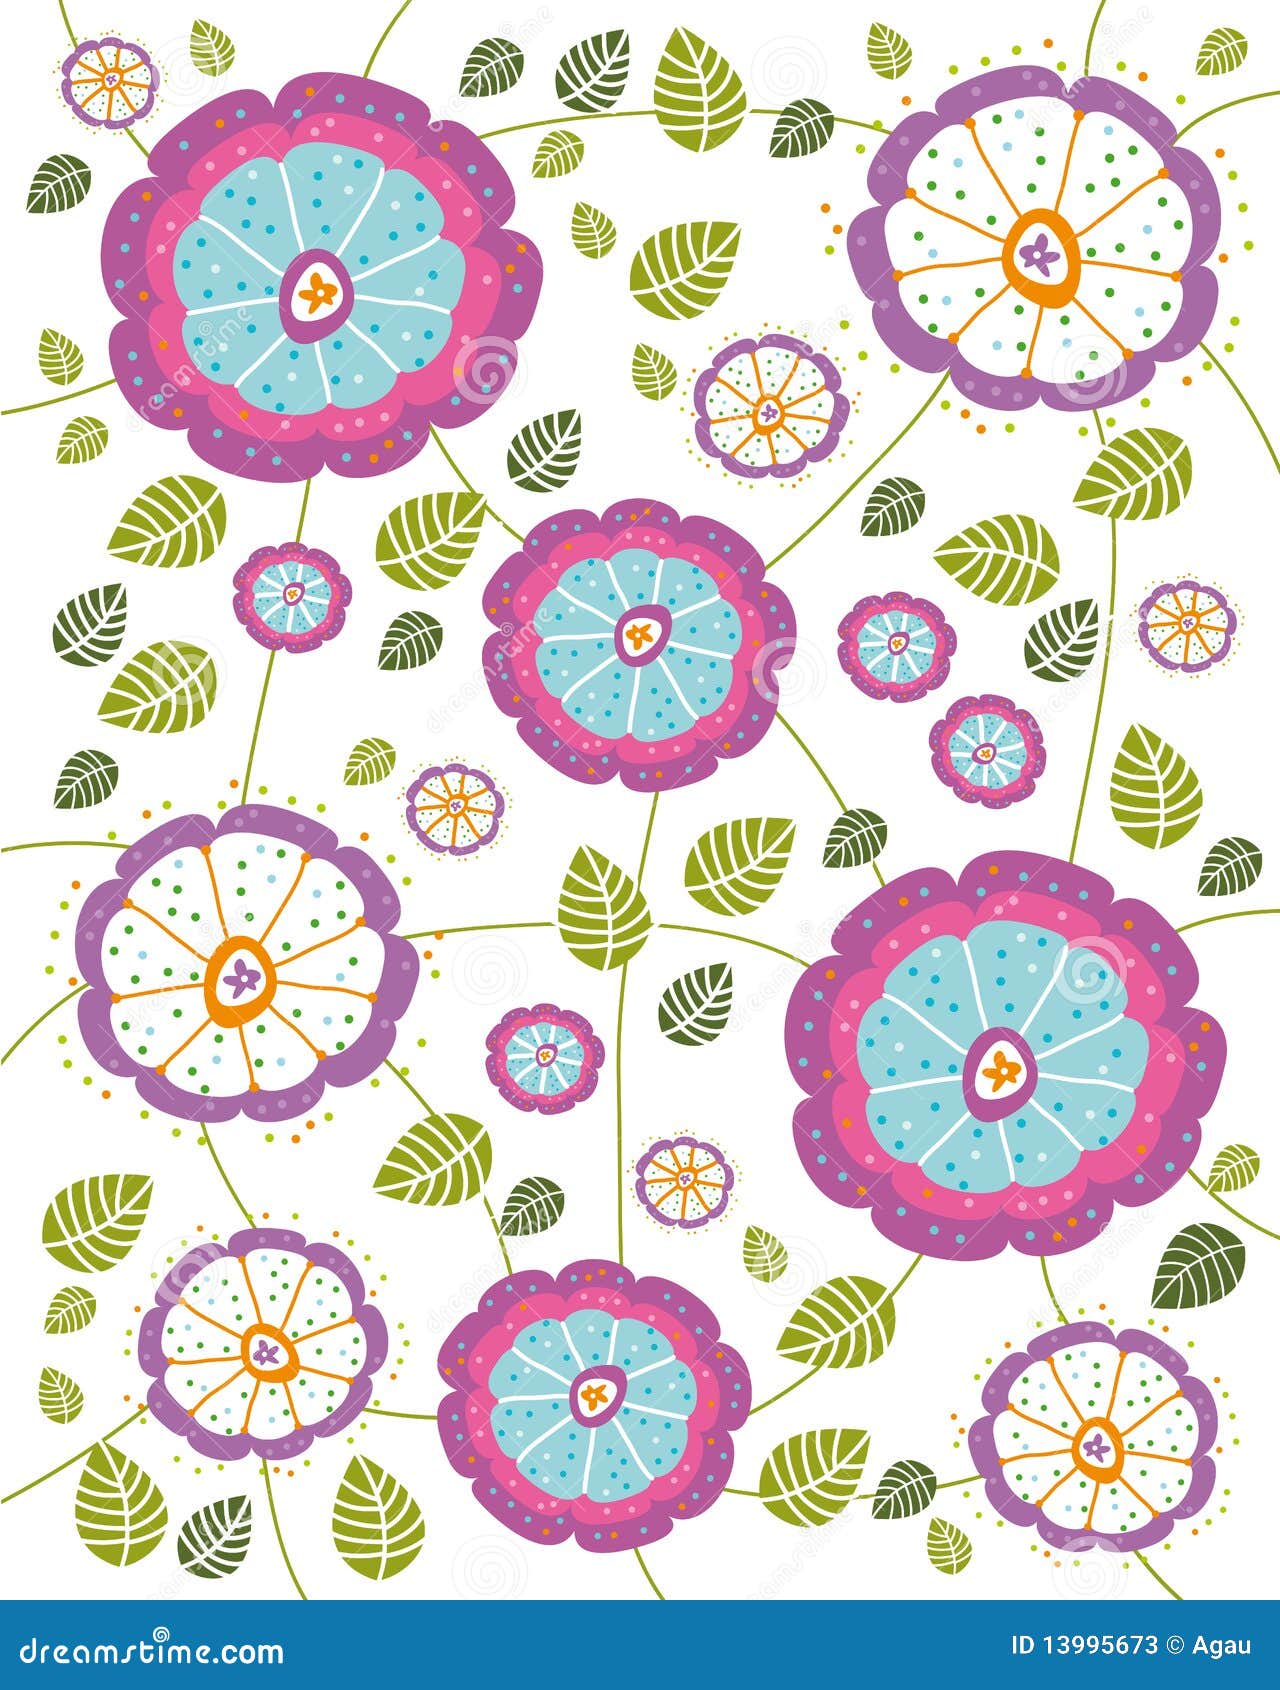 Flower texture stock vector. Illustration of leaves, flowers - 13995673